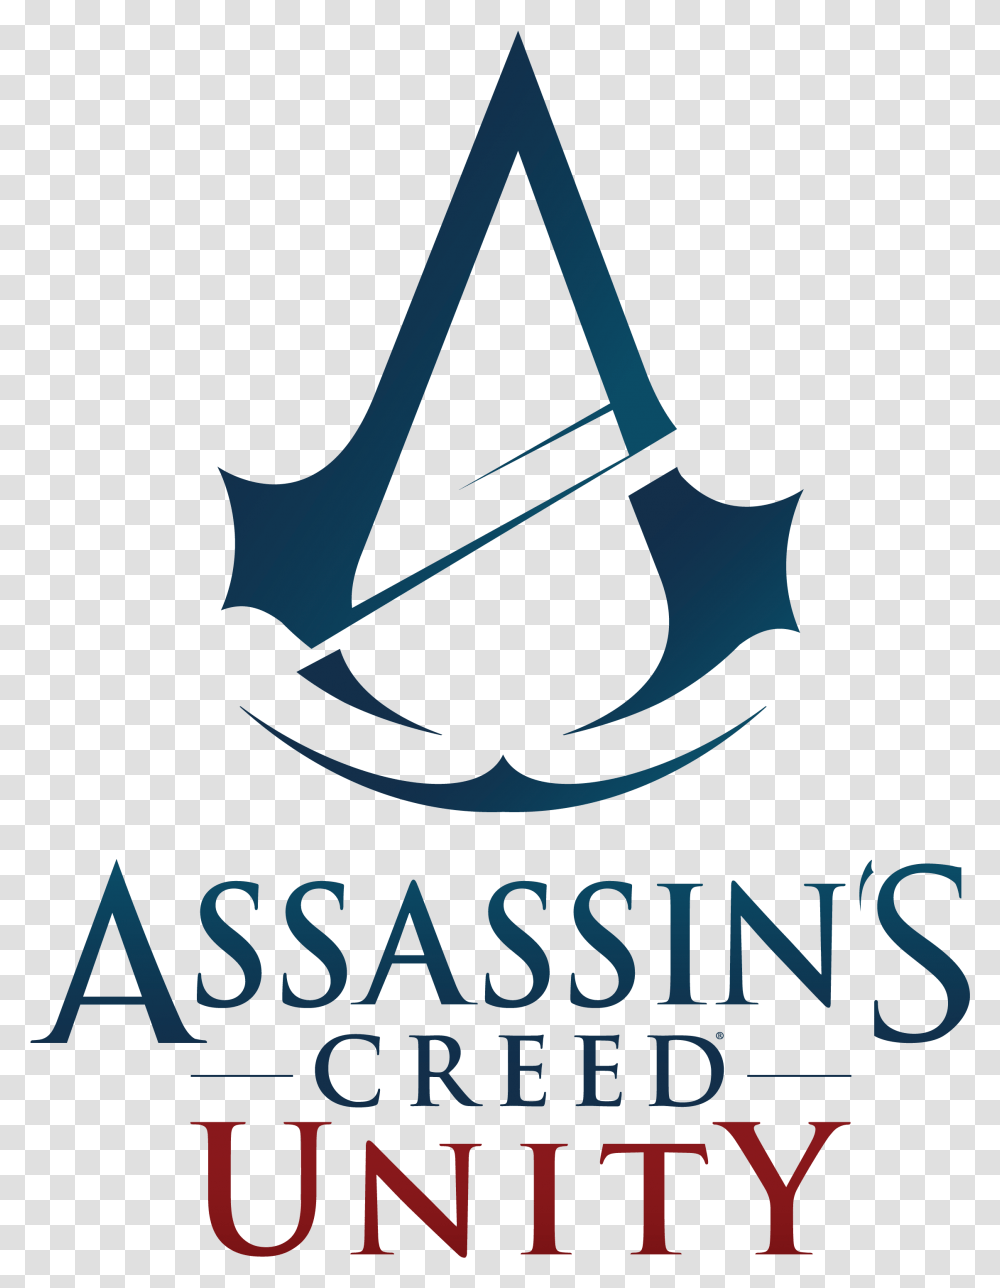 Vector Unity Logos Assassin's Creed Unity, Poster, Advertisement, Emblem Transparent Png